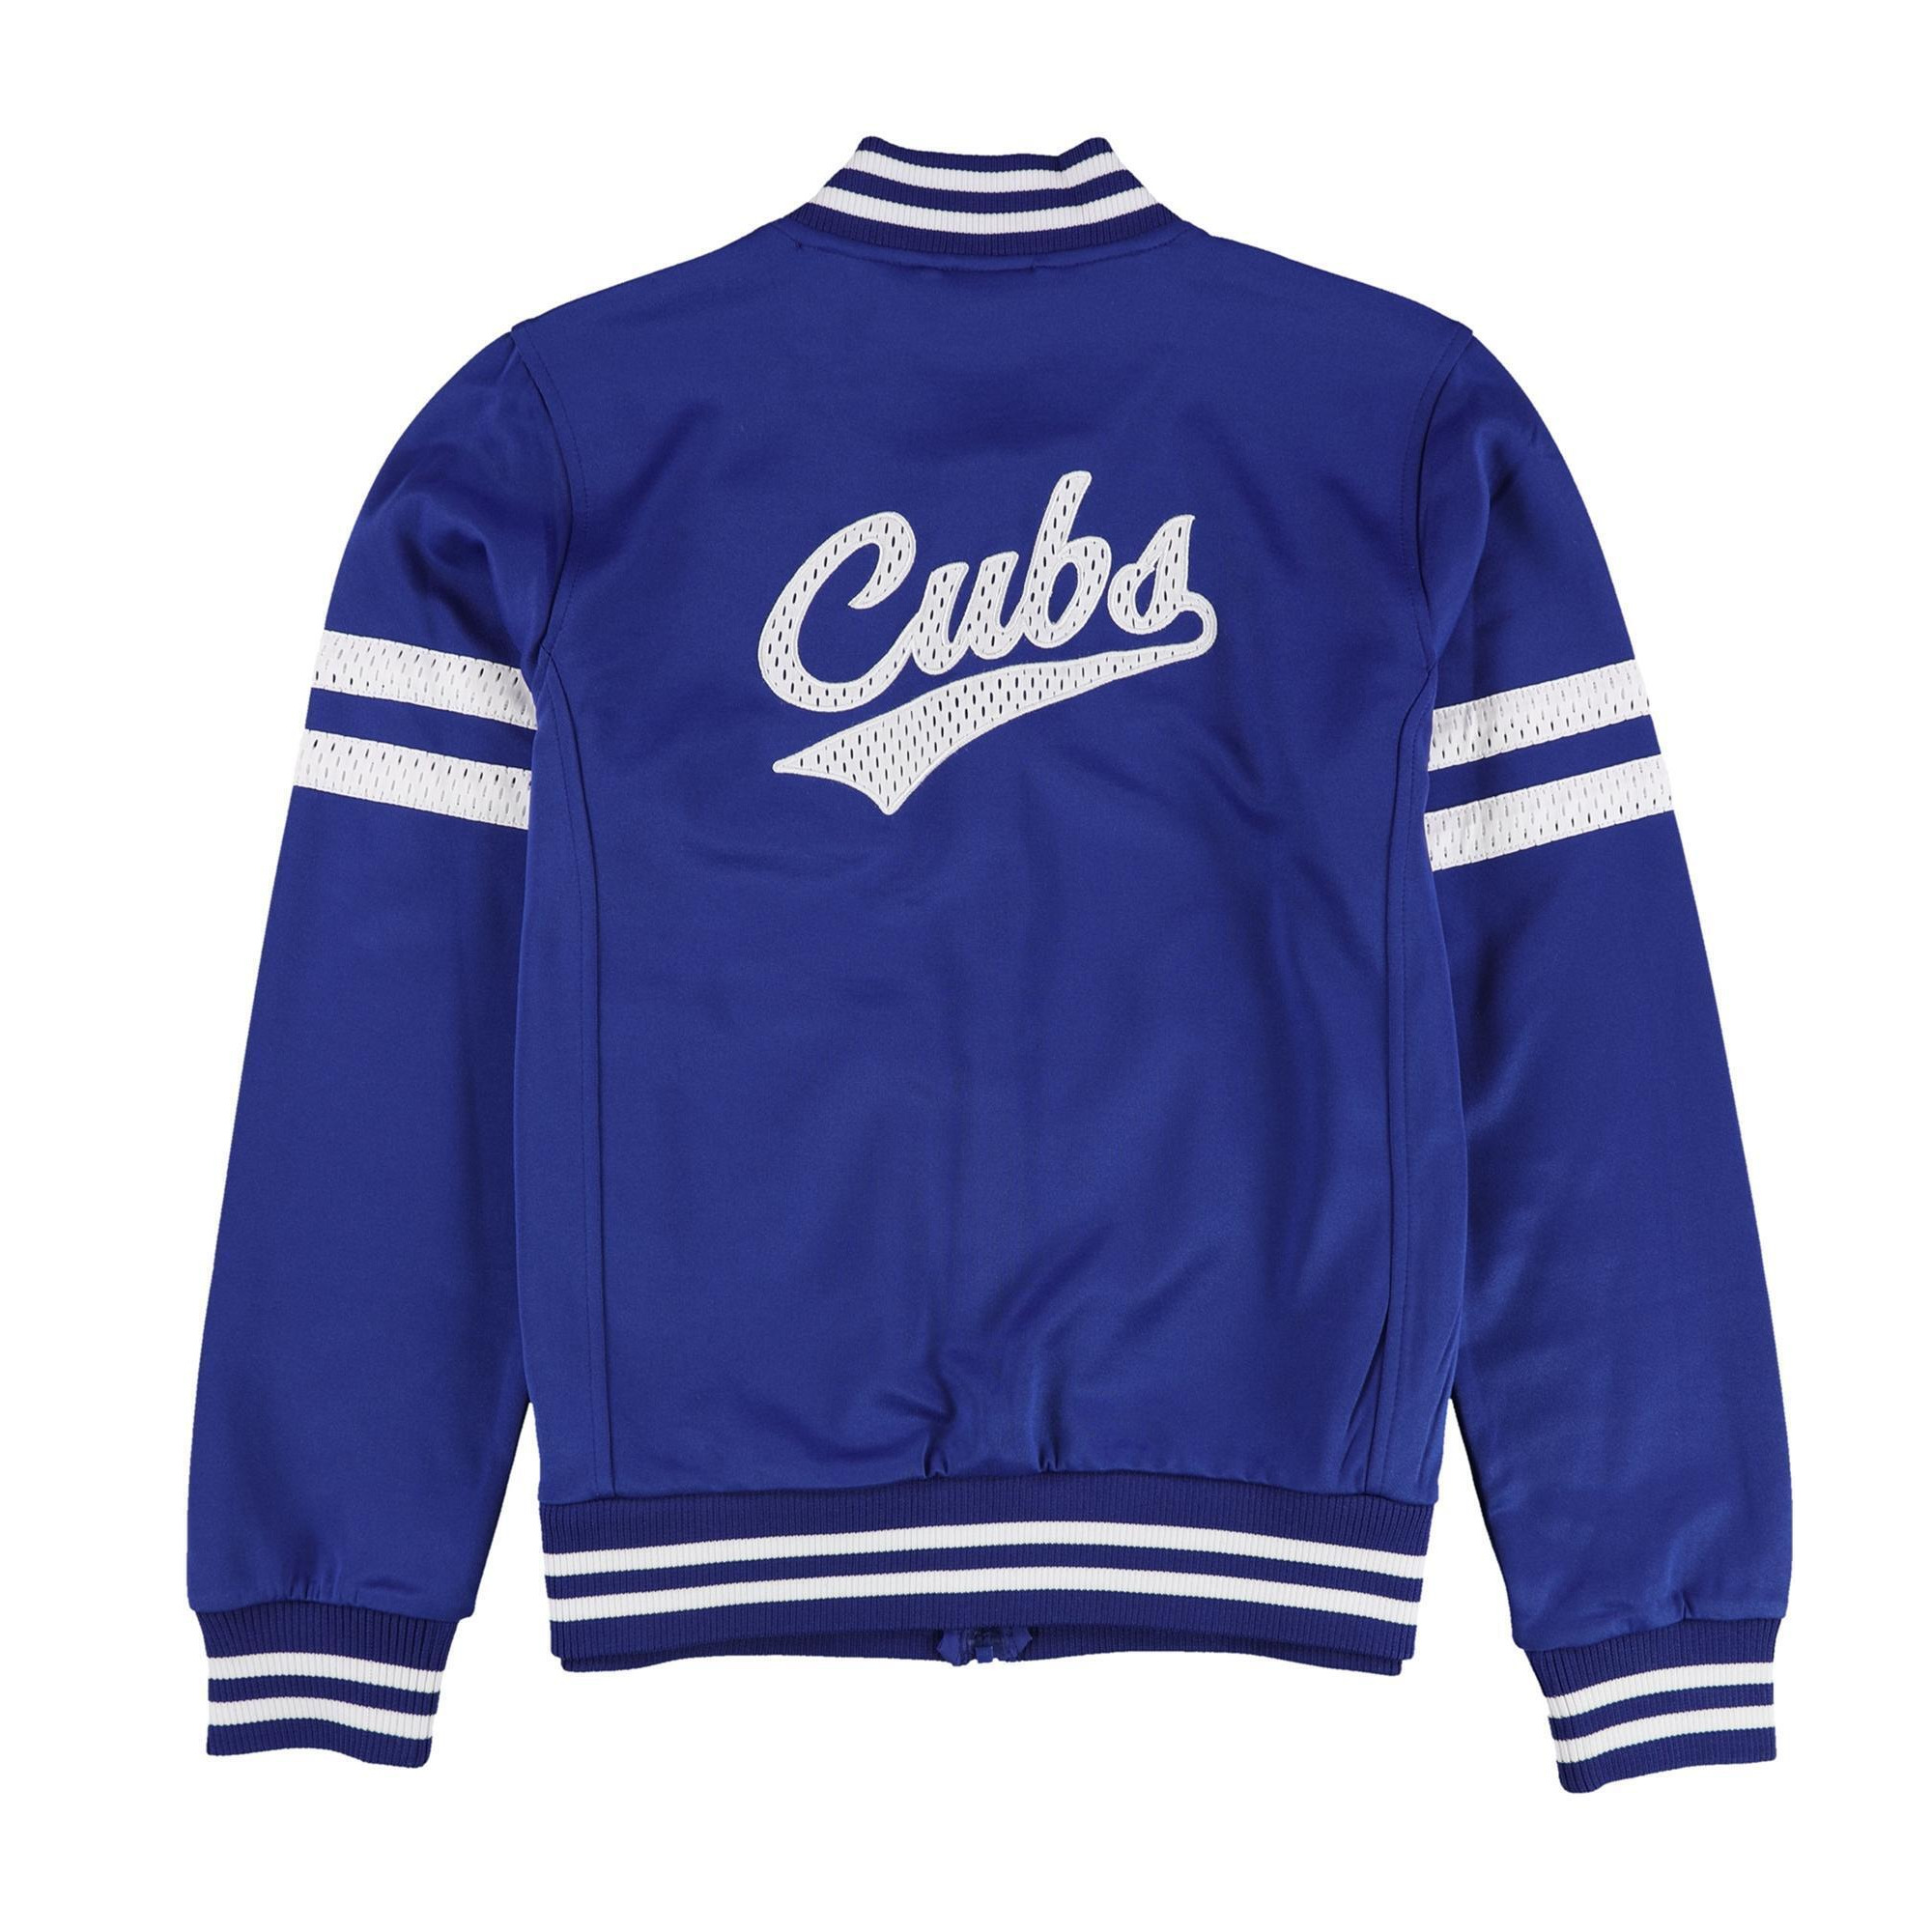 G-III Sports Womens Chicago Cubs Track Jacket Sweatshirt, Style # NM15Z401 alternate image